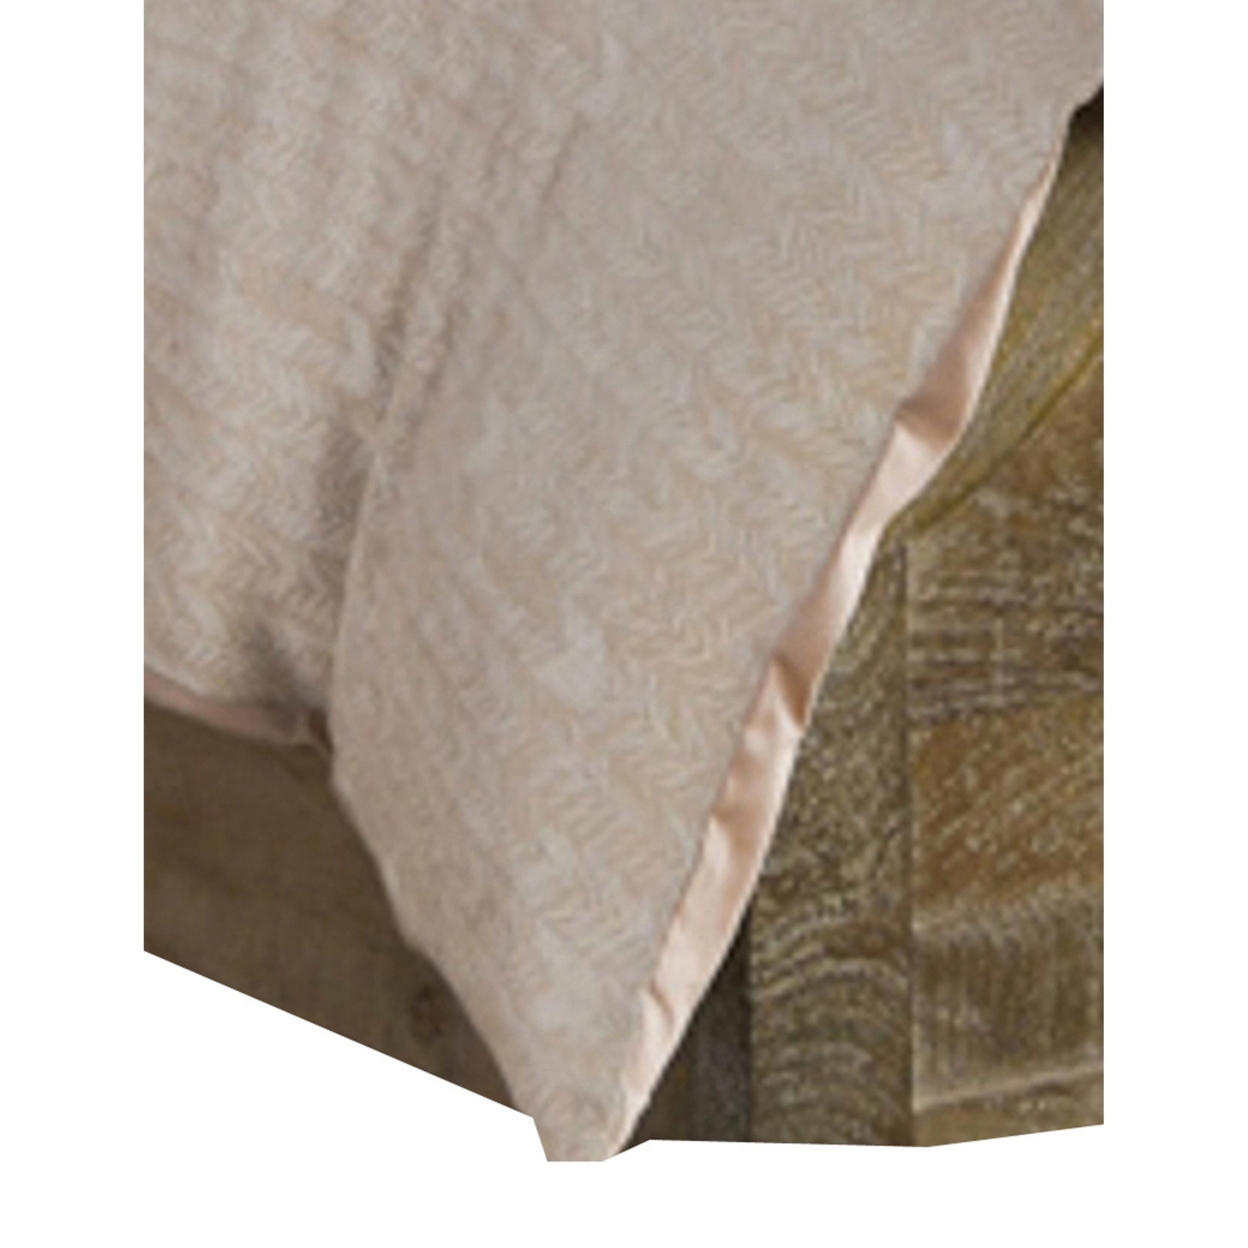 Zima Queen Size Cotton Duvet Cover, Woven French Herringbone Pattern, Beige- Saltoro Sherpi